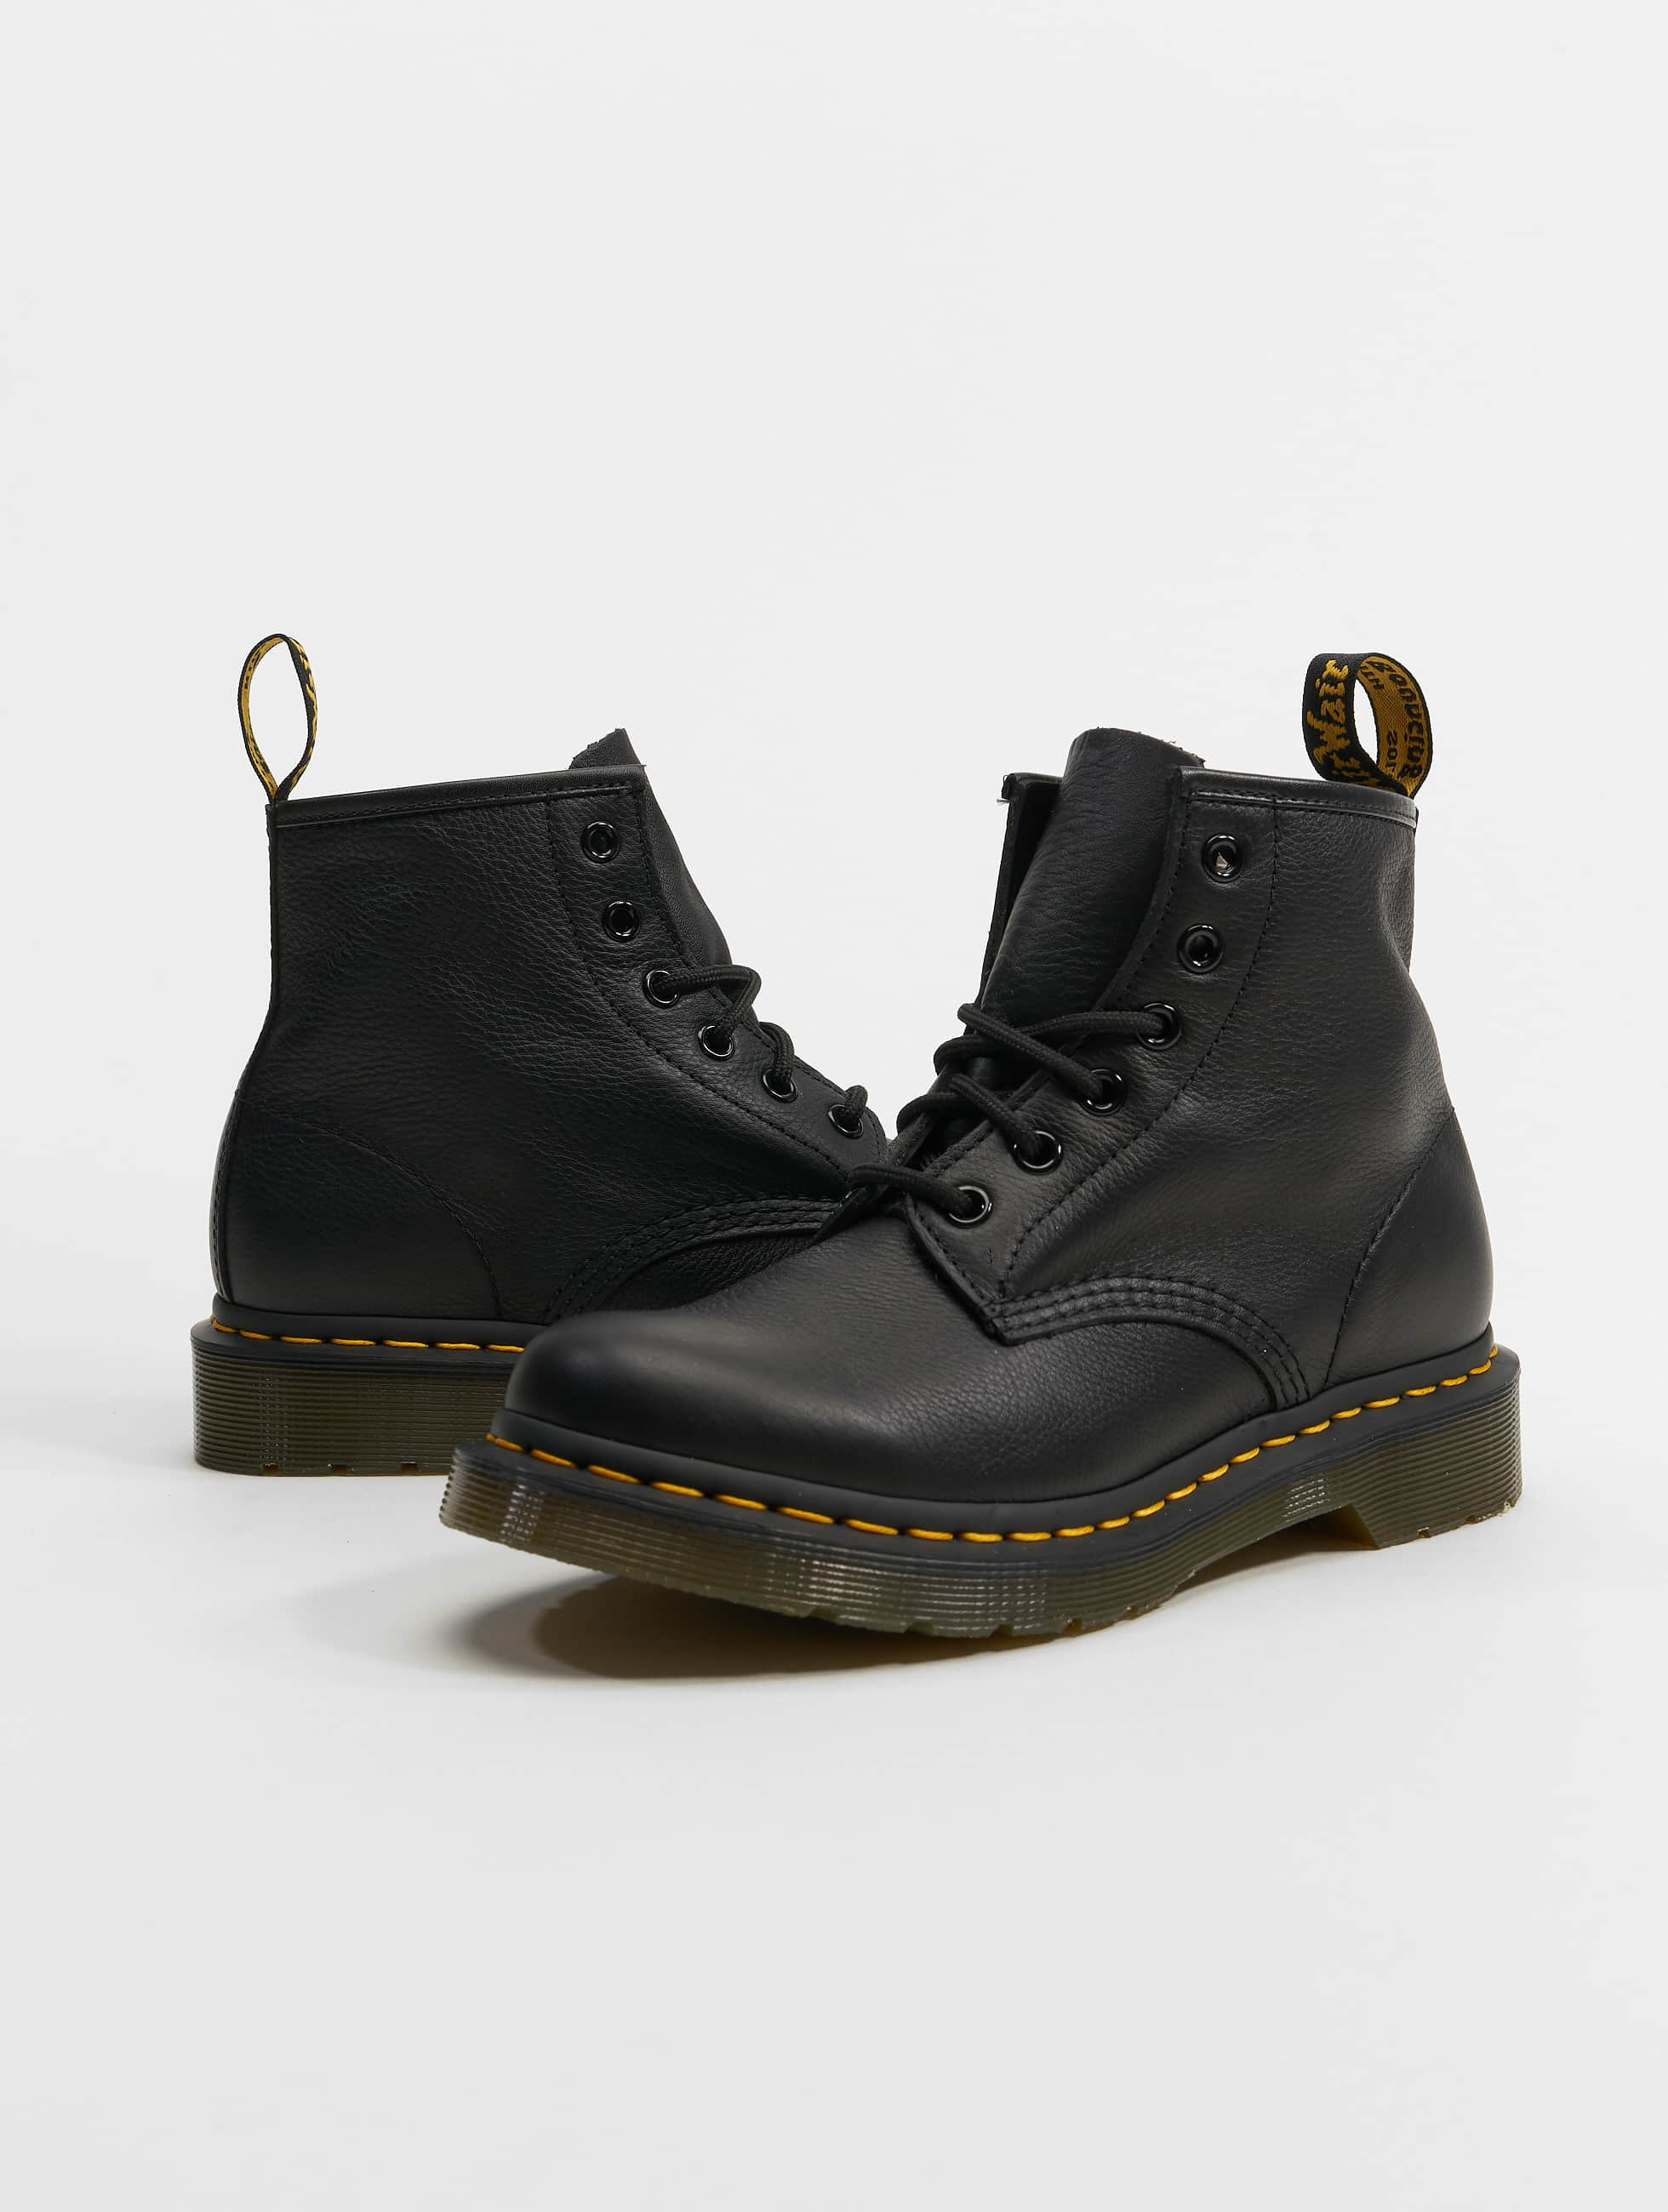 Taille Lol Verheugen Dr. Martens schoen / Boots 101 in zwart 996022